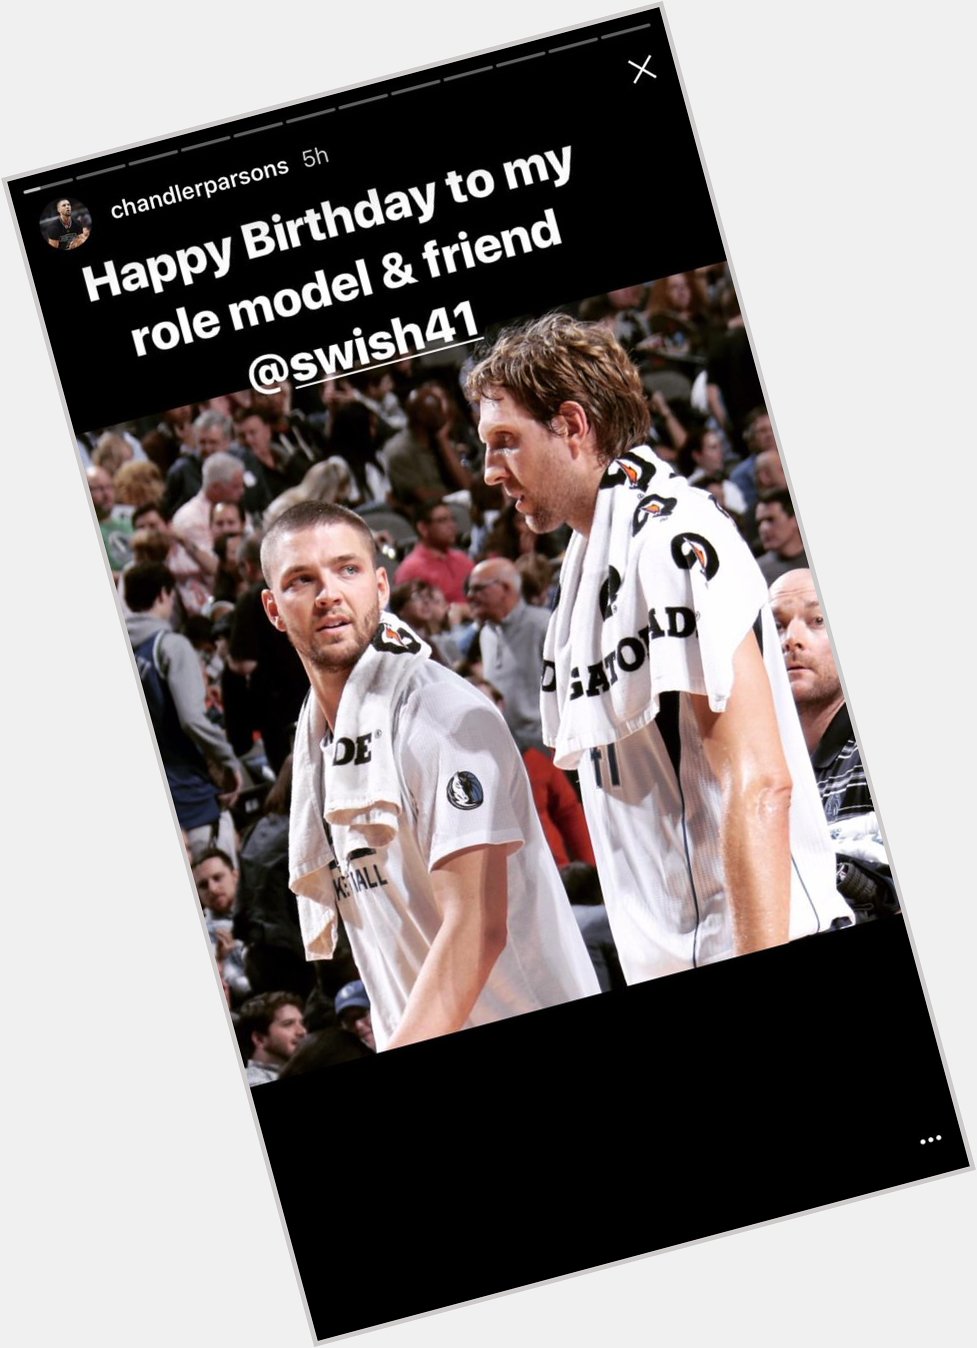 Chandler Parsons wished Dirk Nowitzki a Happy Birthday on IG 